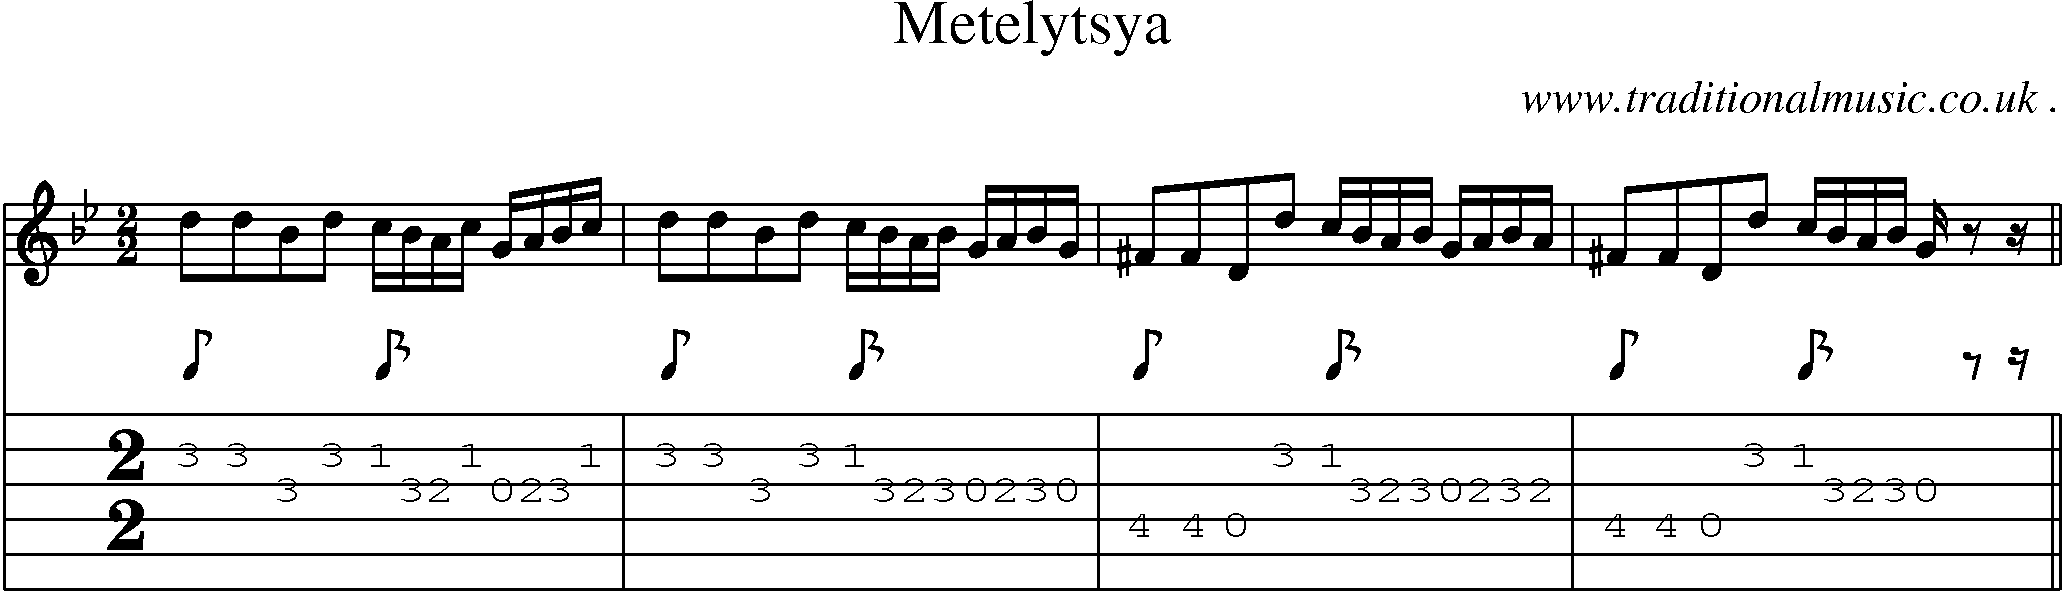 Sheet-Music and Guitar Tabs for Metelytsya